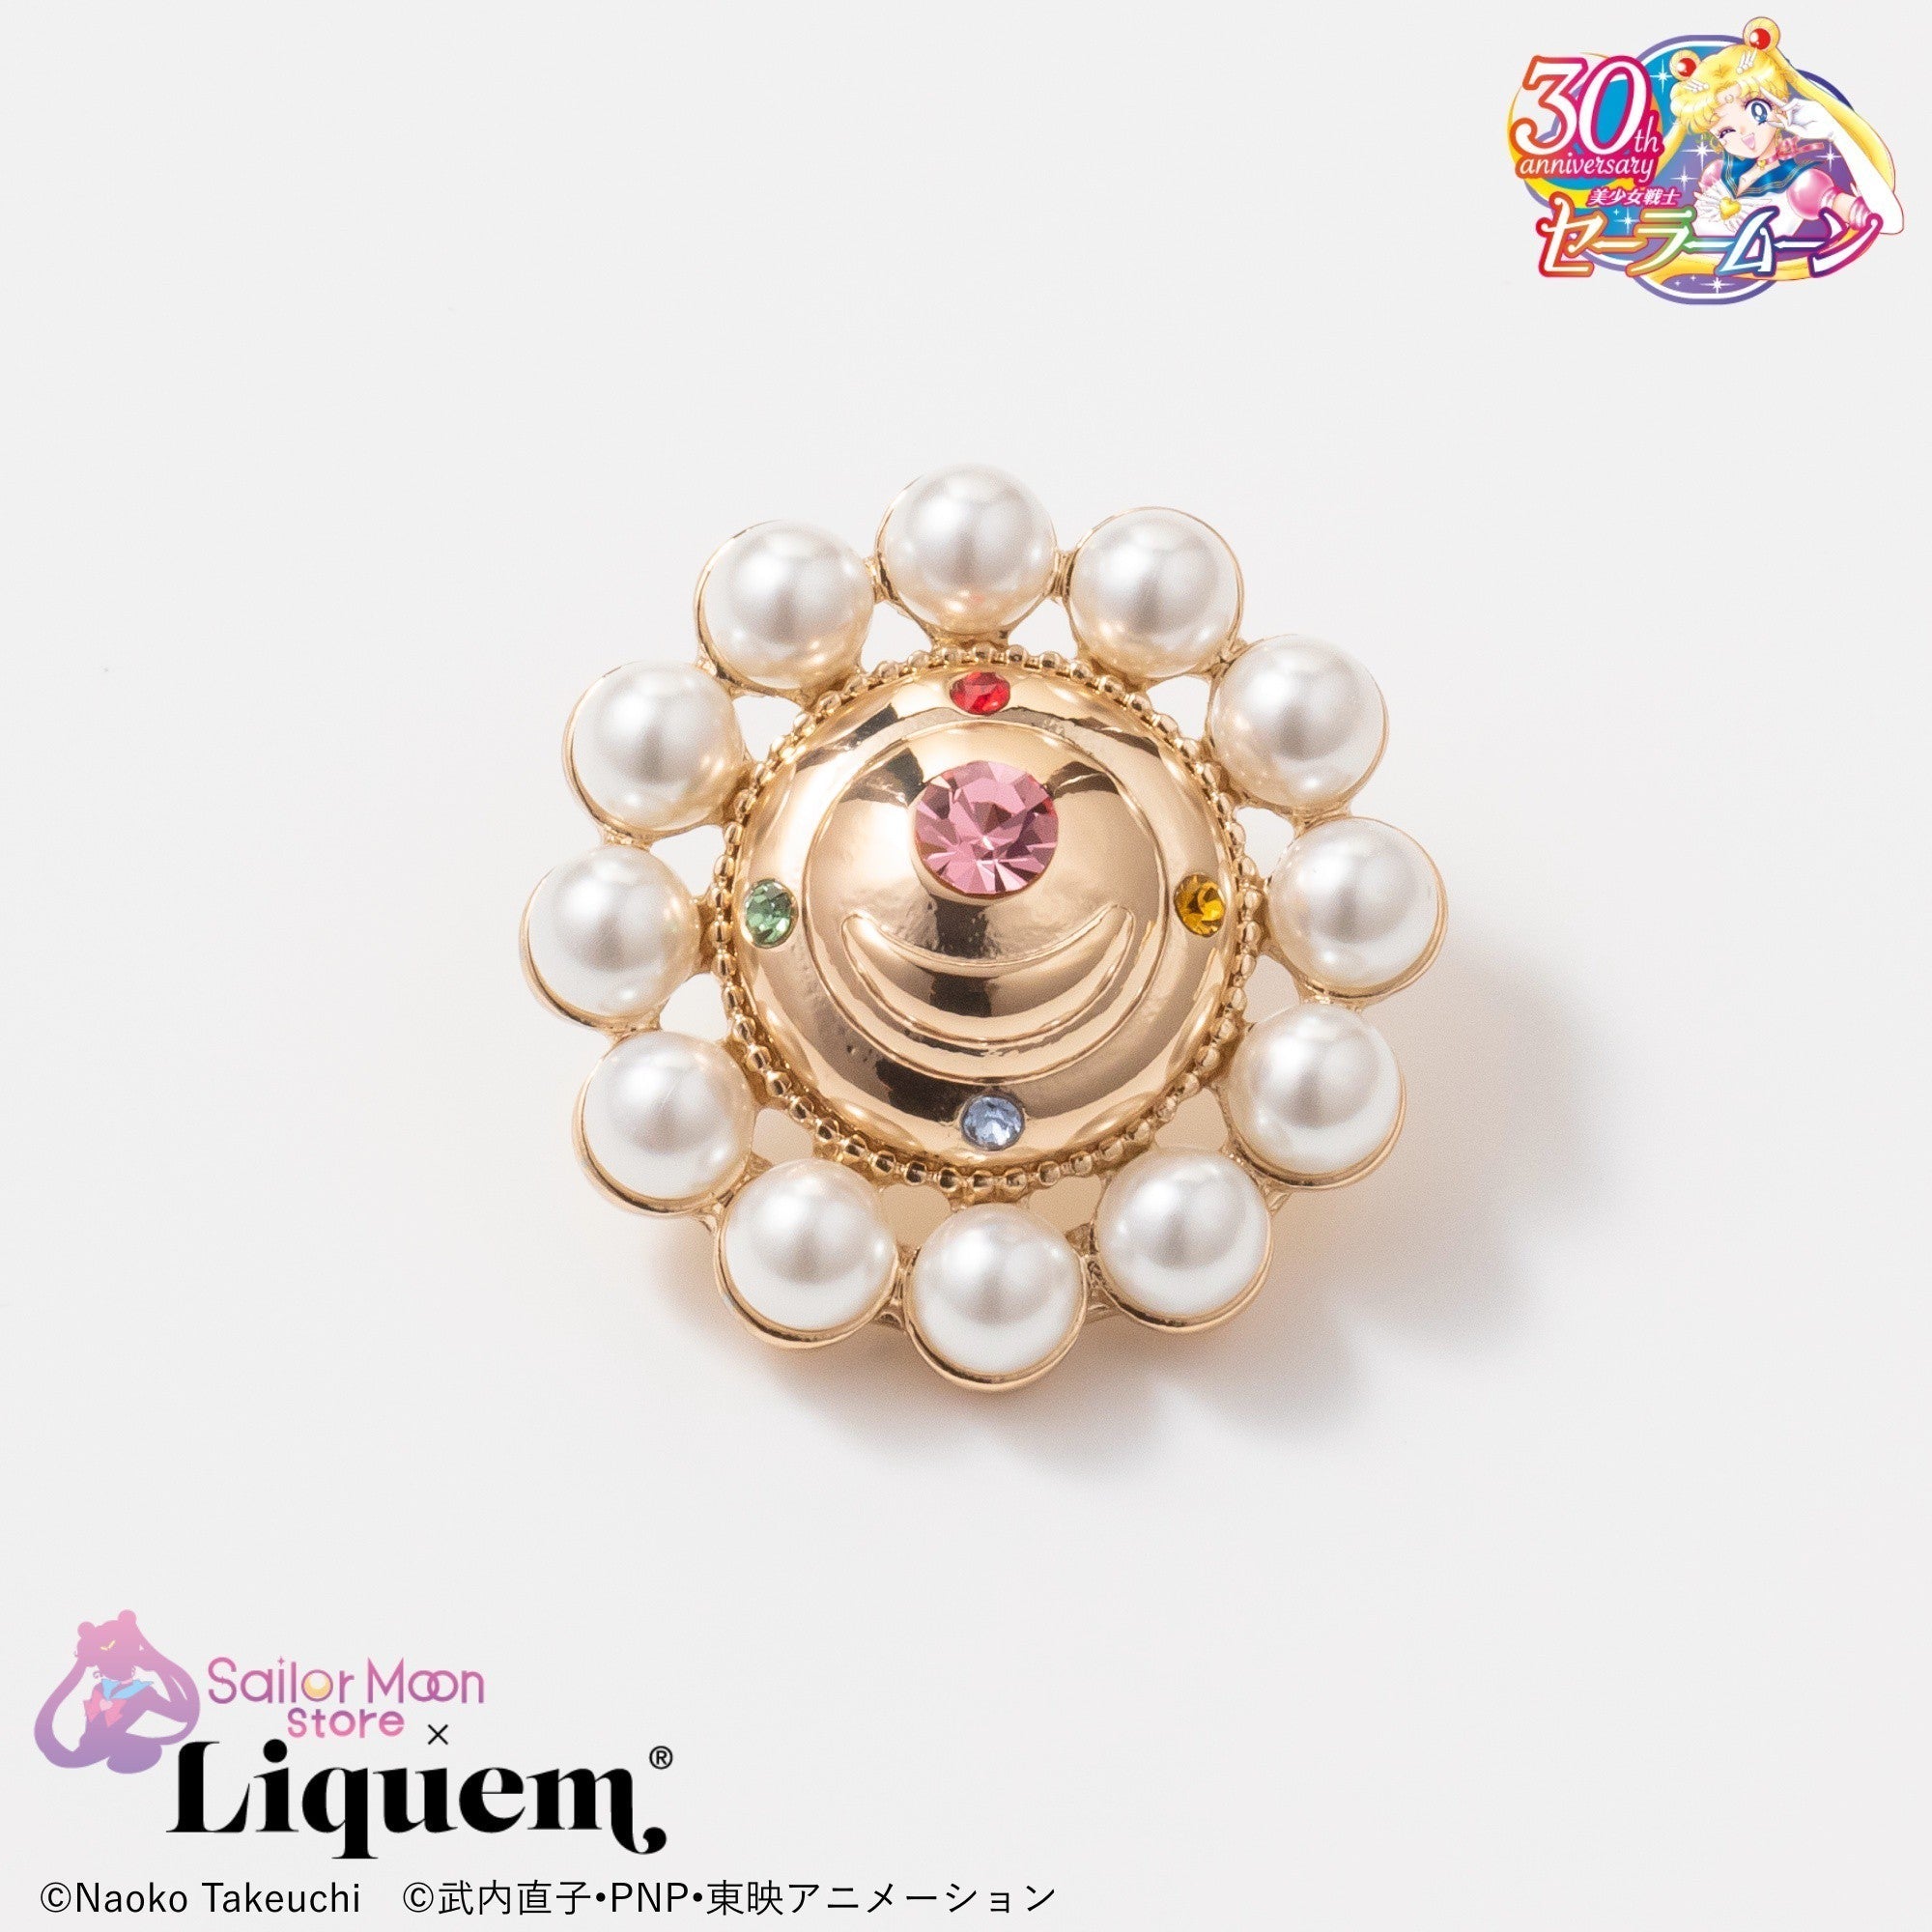 Sailor Moon store x Liquem リング ピンズ ブローチ